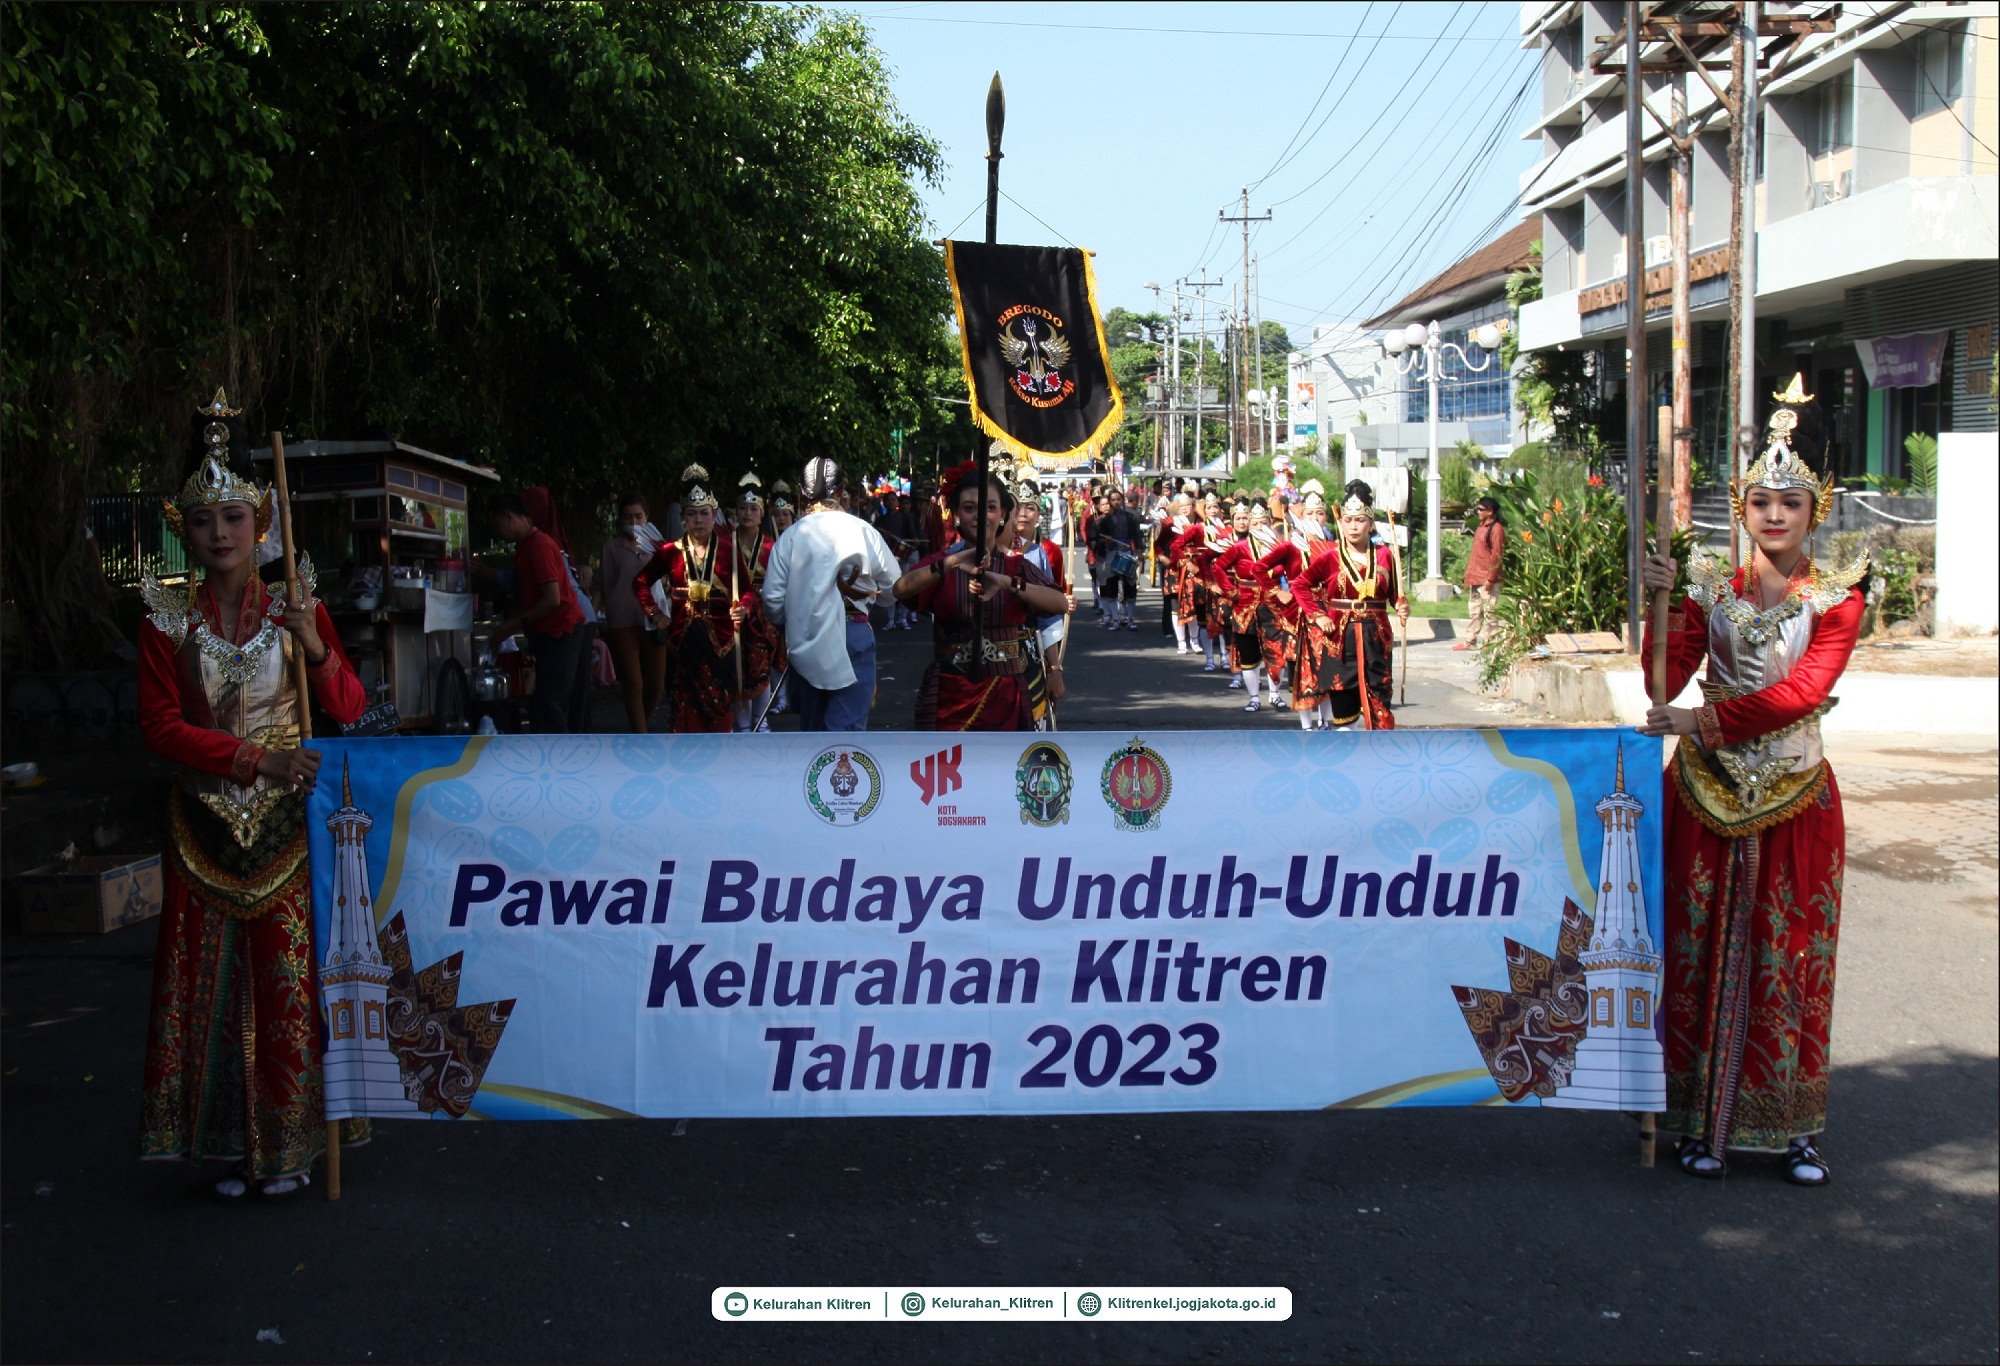 Pawai Budaya Unduh-Unduh Kelurahan Klitren Tahun 2023